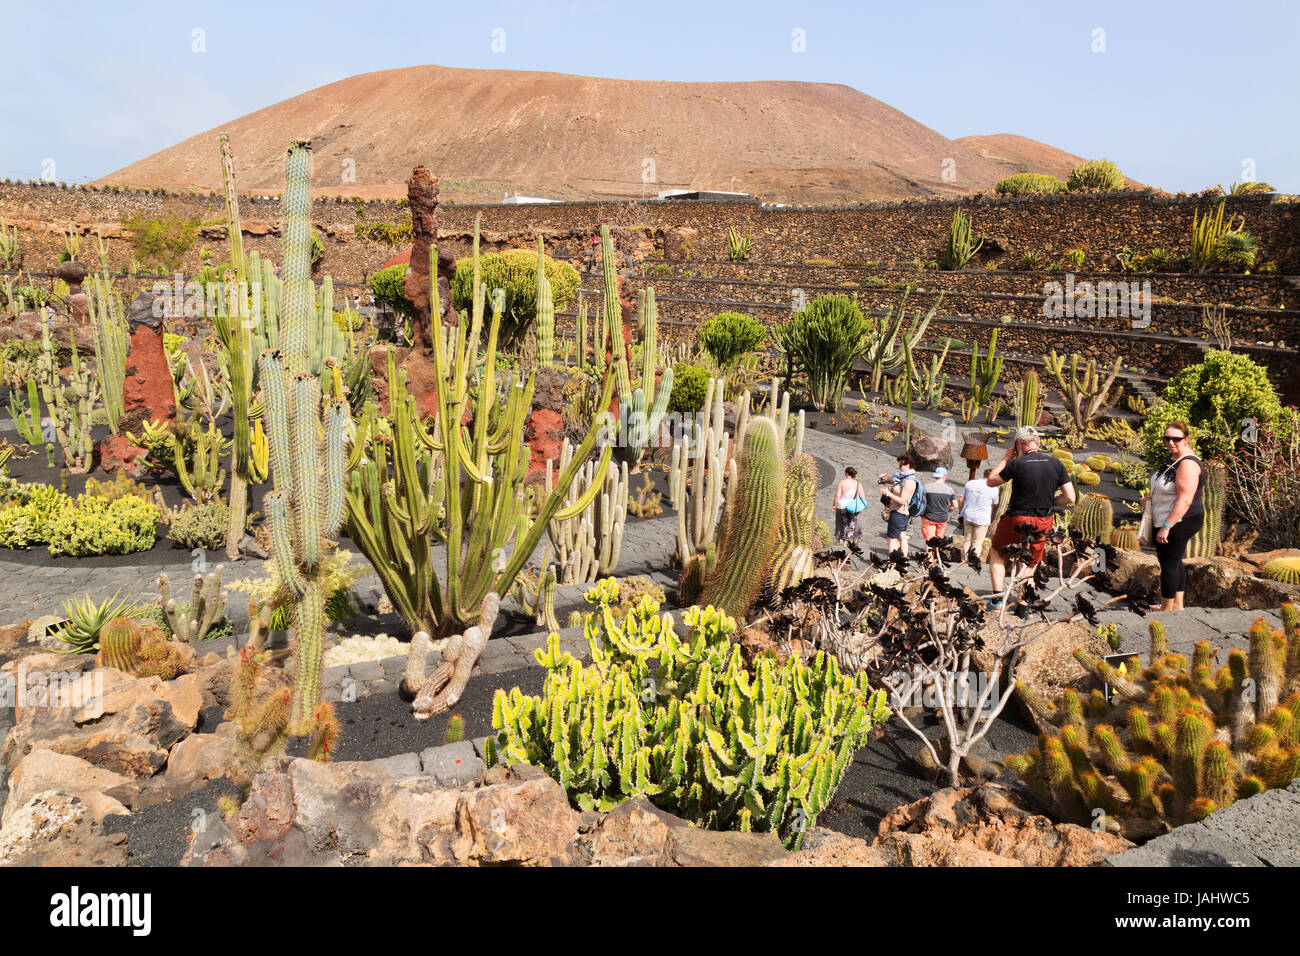 Jardin de cactus de Lanzarote ou jardin de cactus, conçu par l'artiste local Cesar Manrique, Lanzarote, Canaries, l'Europe Banque D'Images